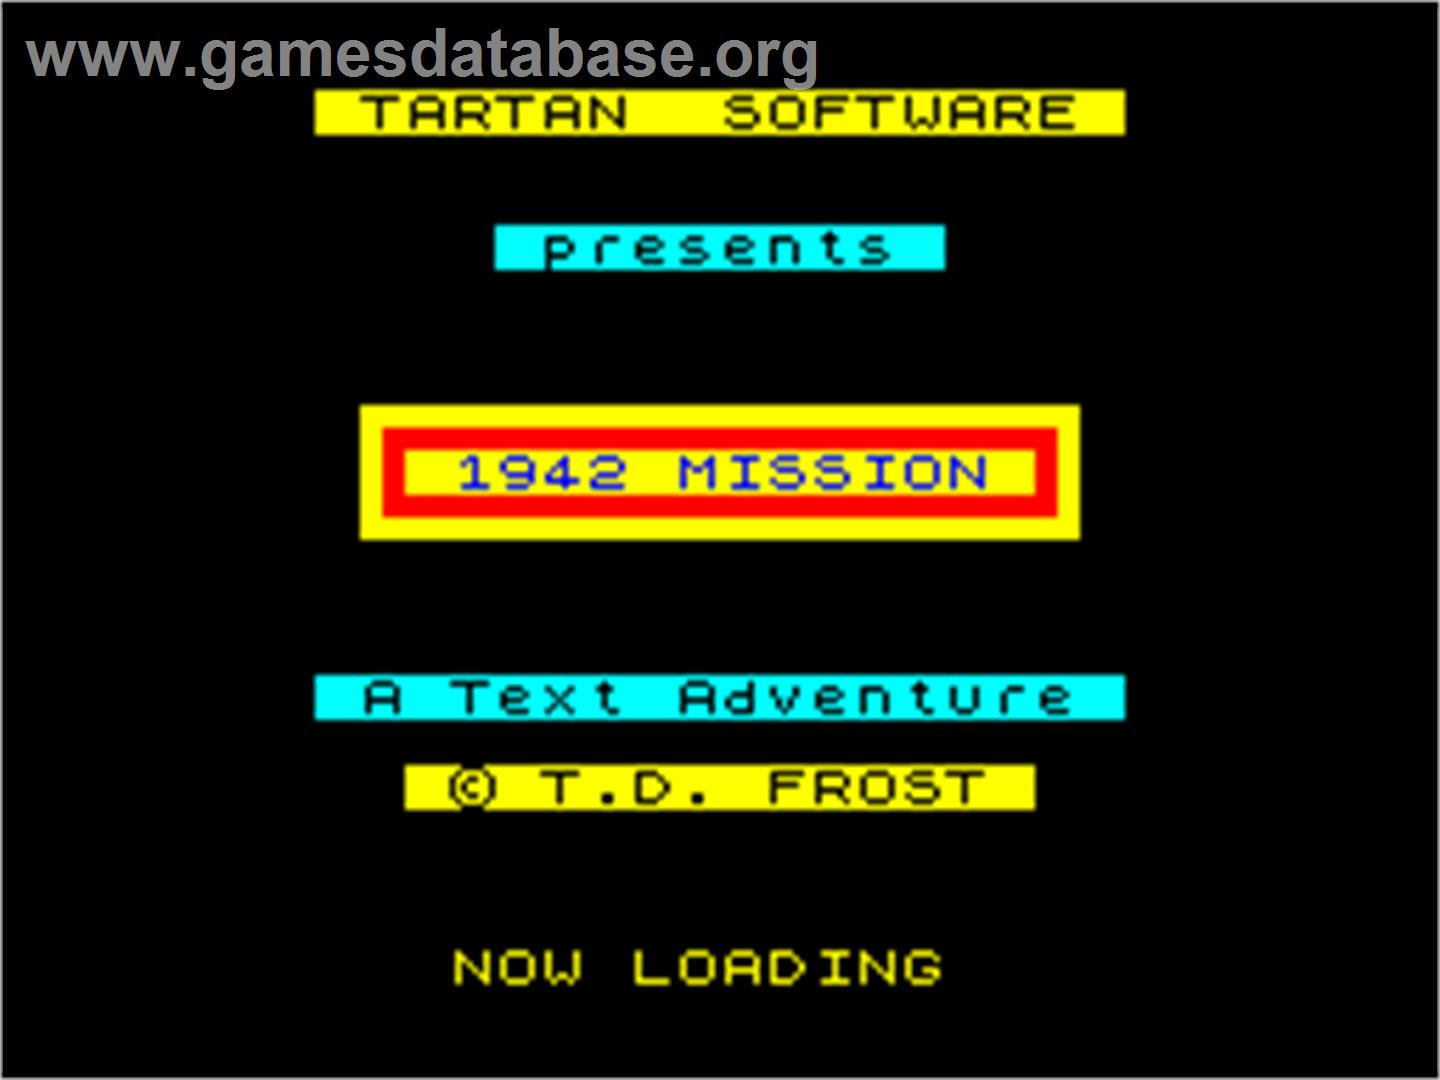 1942 Mission - Sinclair ZX Spectrum - Artwork - Title Screen